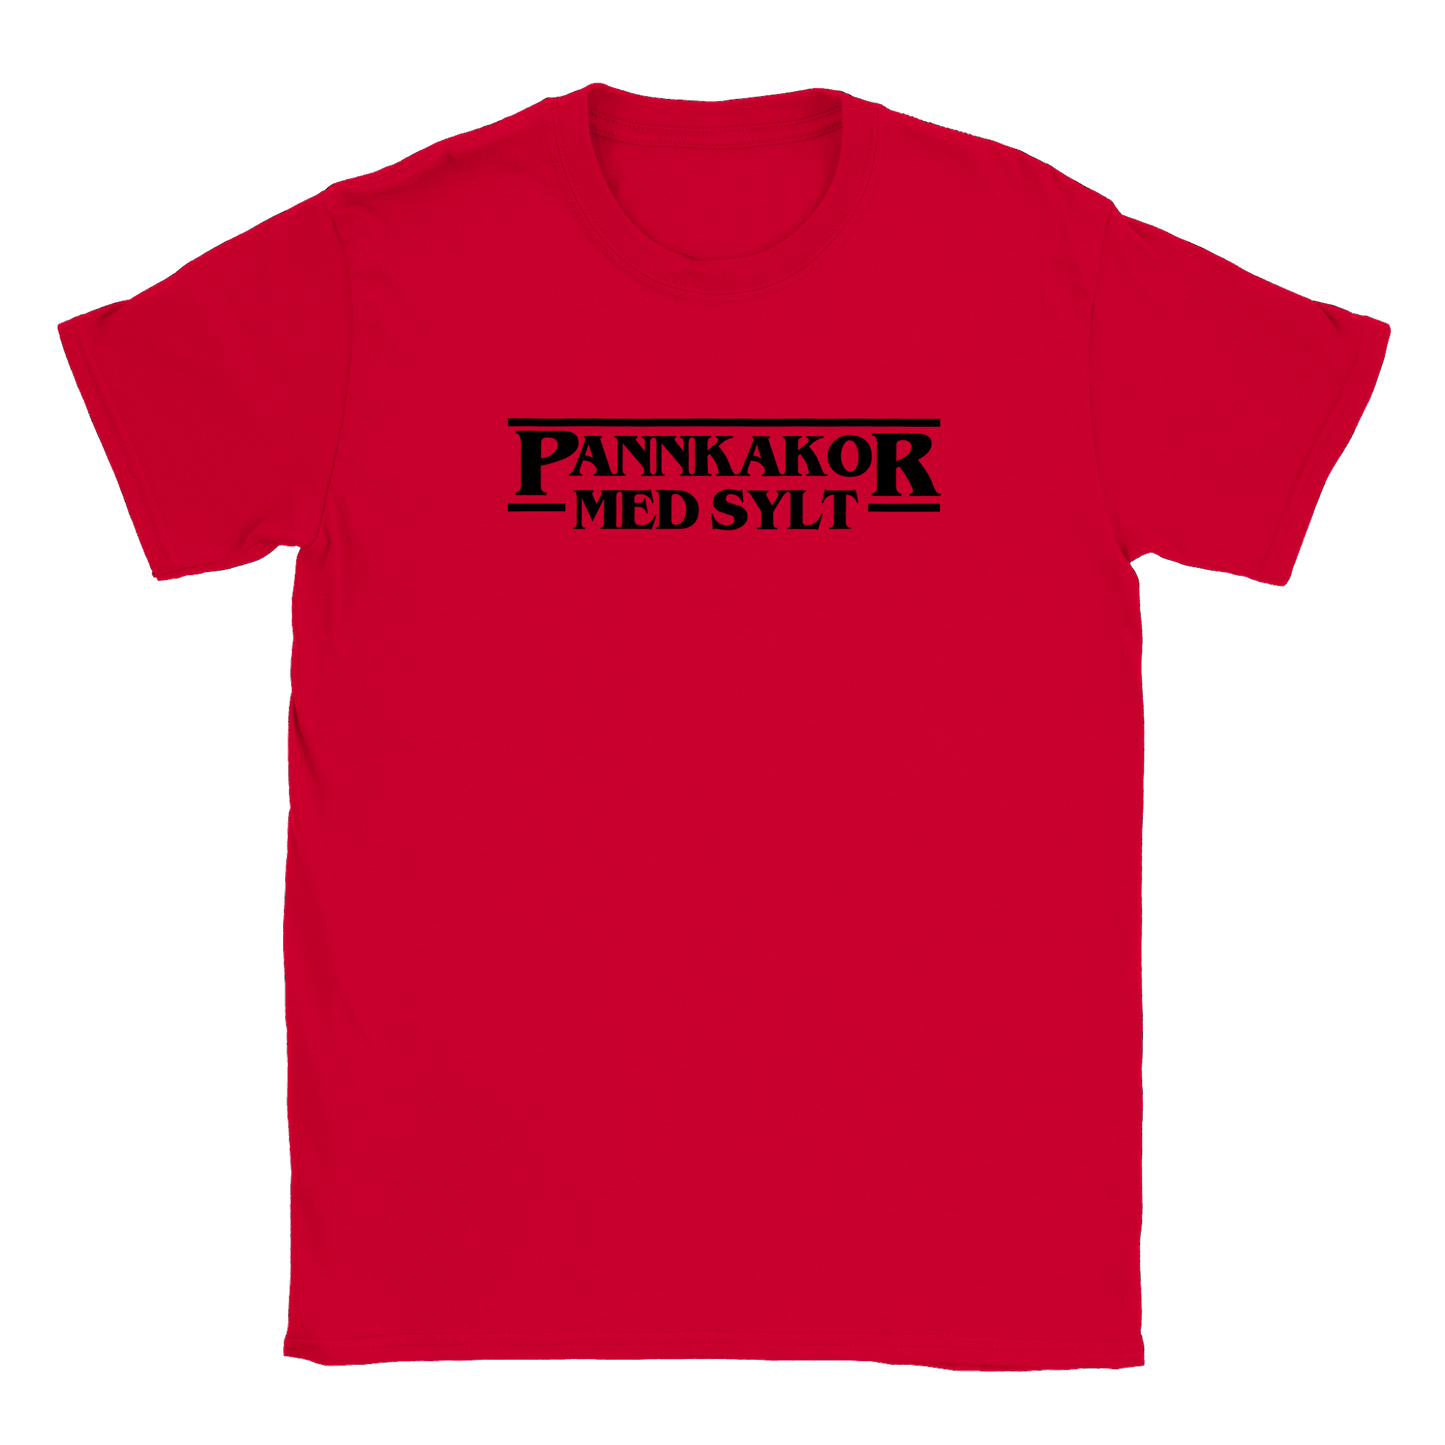 Pannkakor med sylt - T-shirt Röd